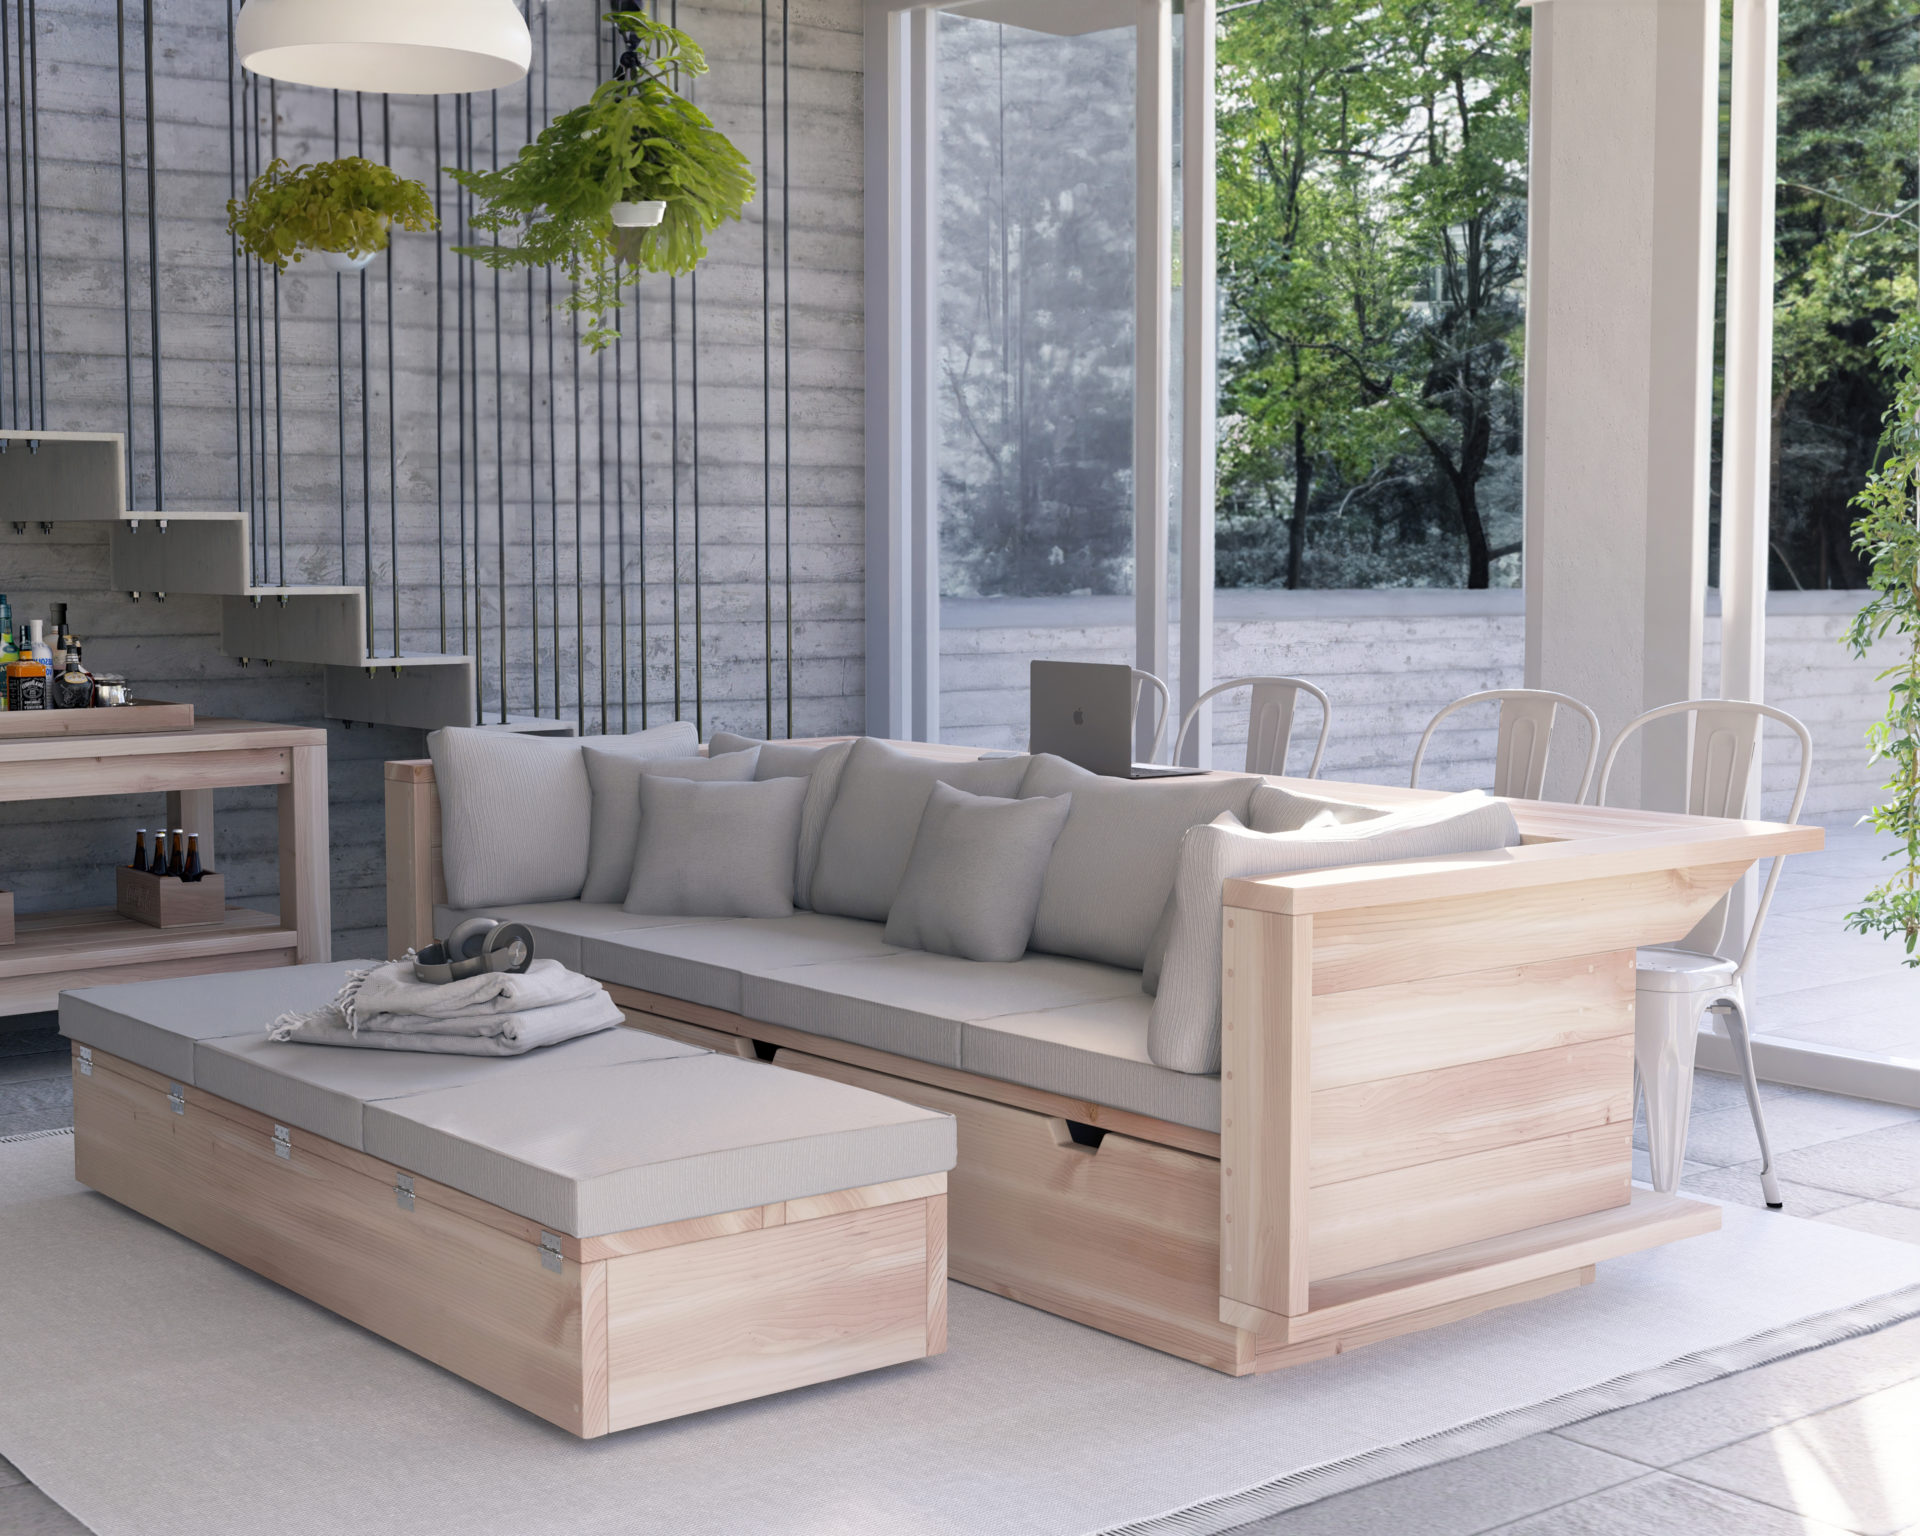 Diy Woodworking Plans For Modular Sofa